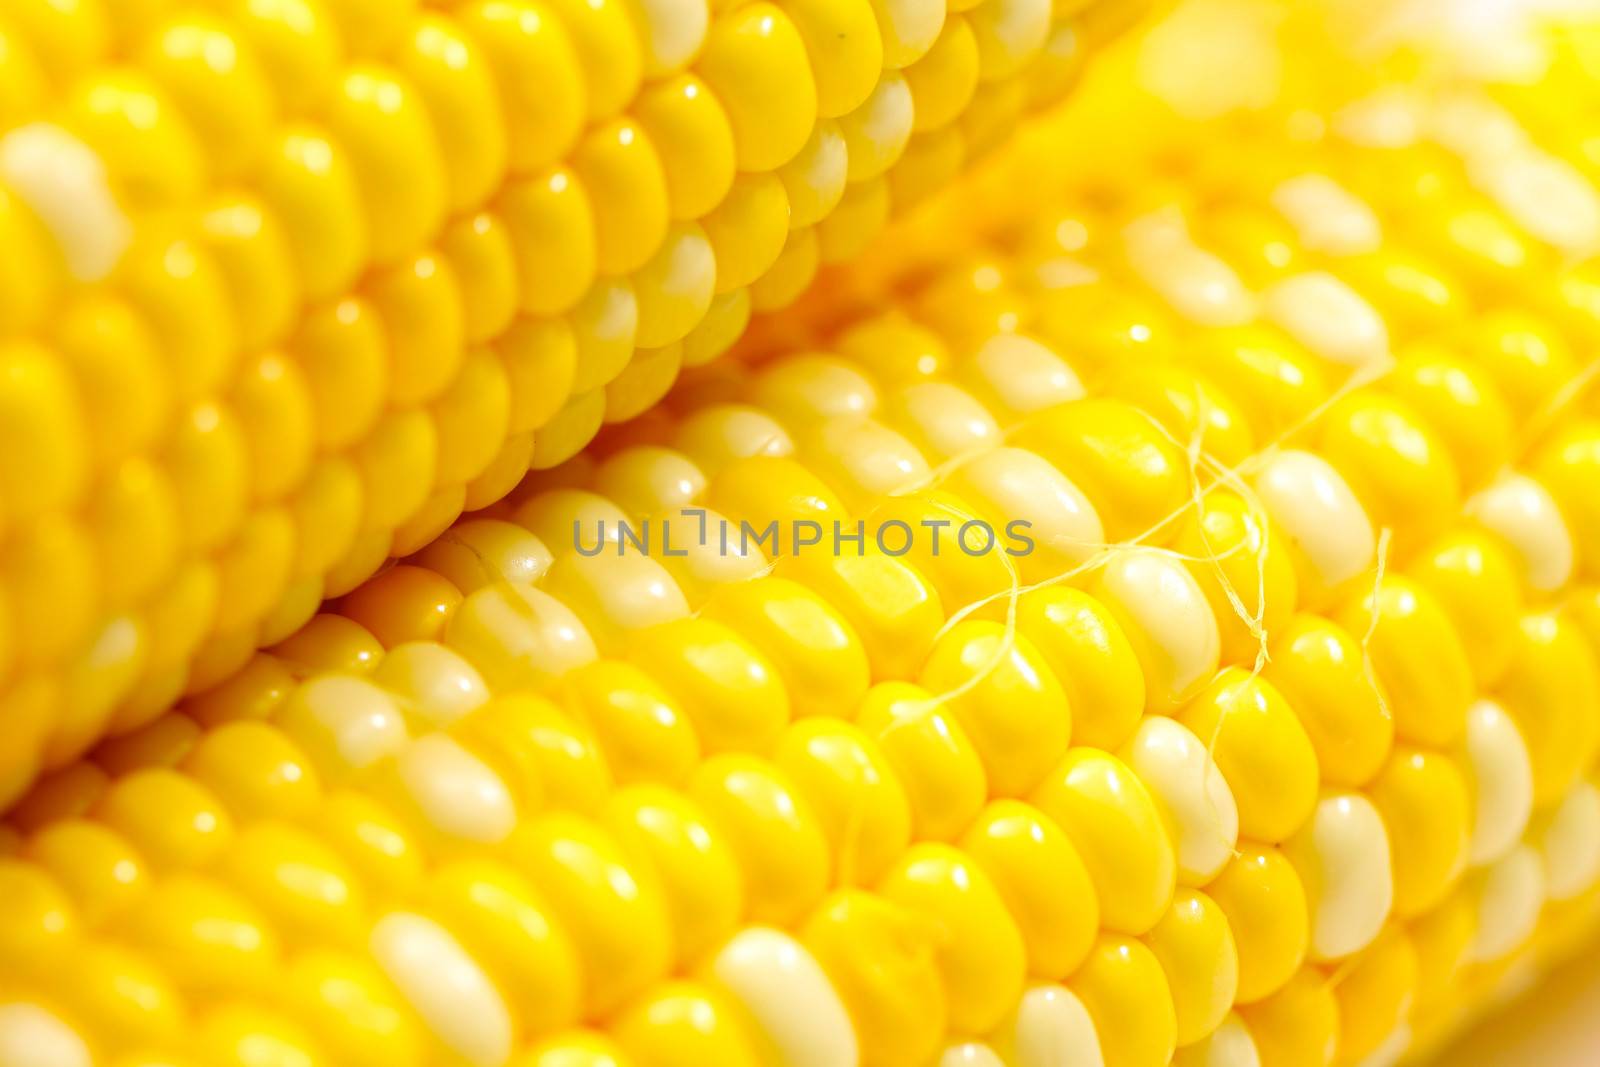 Corn cob by kawing921